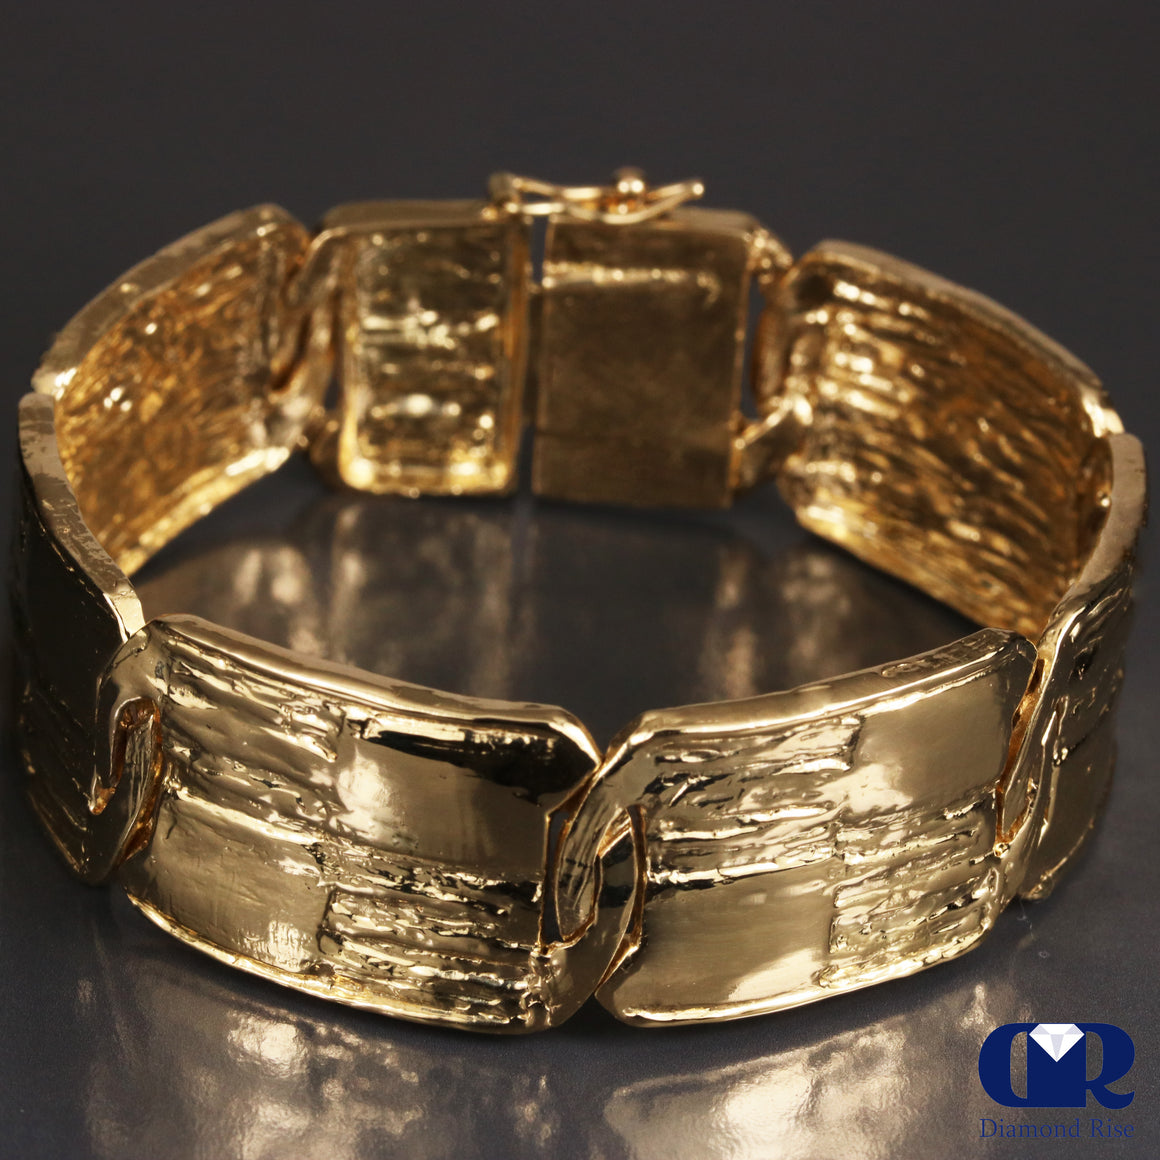 Large 14K Solid Yellow Gold Handmade Bangle Bracelet 6.75"